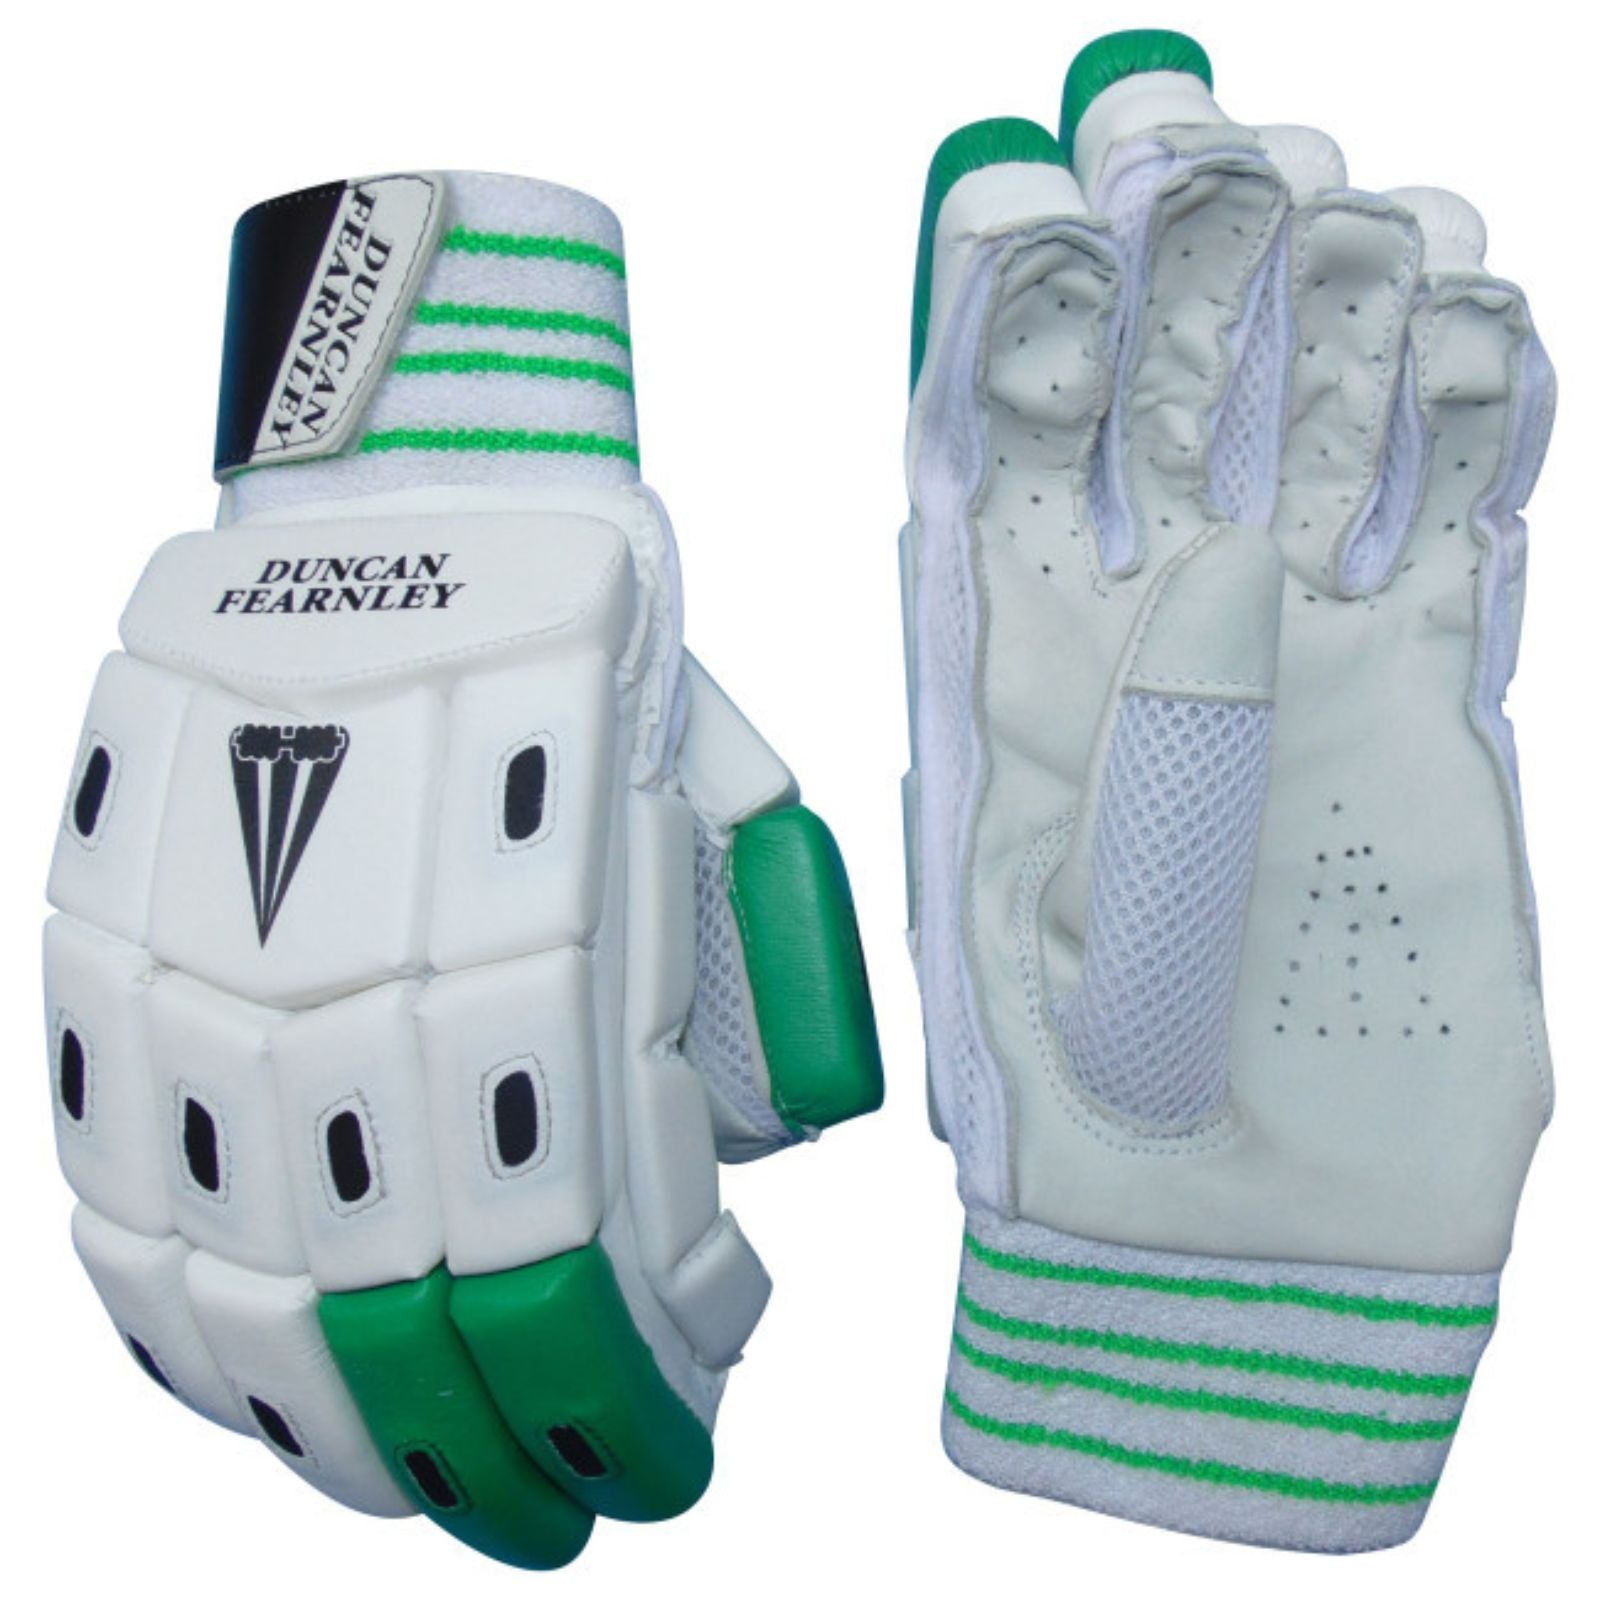 Duncan Feranley Magnum Cricket Batting Gloves - Senior